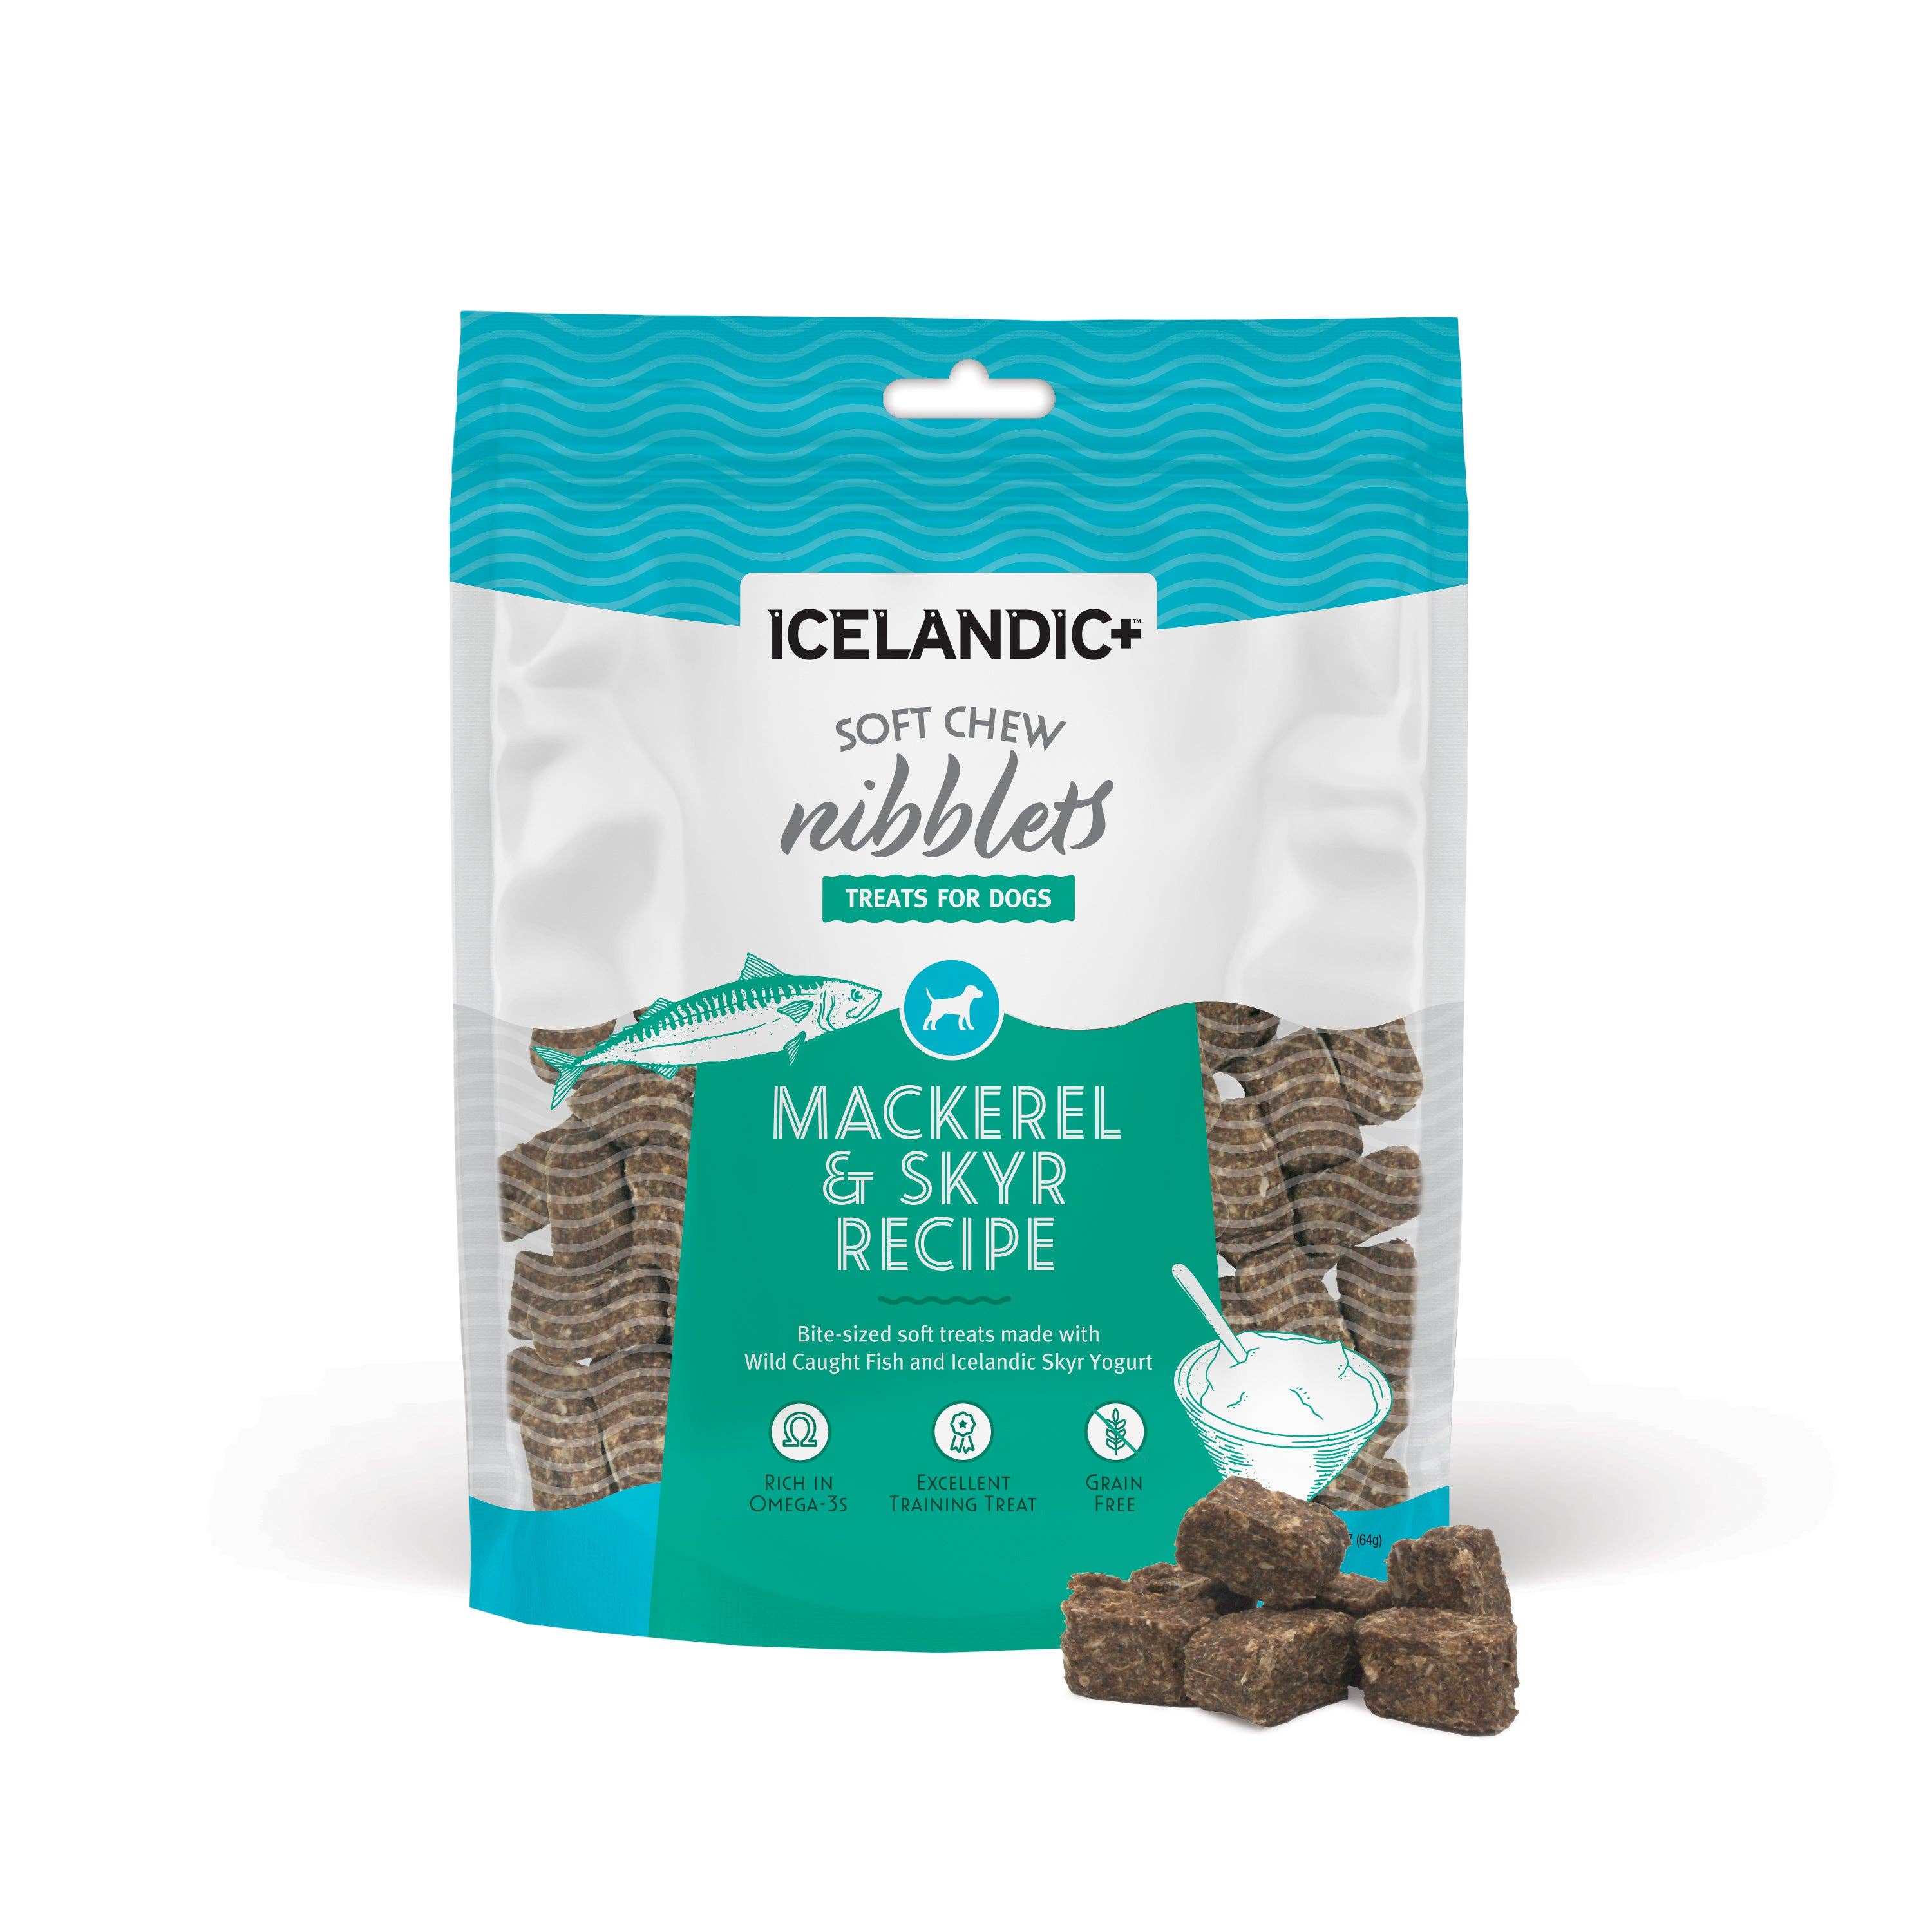 Icelandic+ Soft Chew Nibblets Mackerel & Skyr Dog Treats